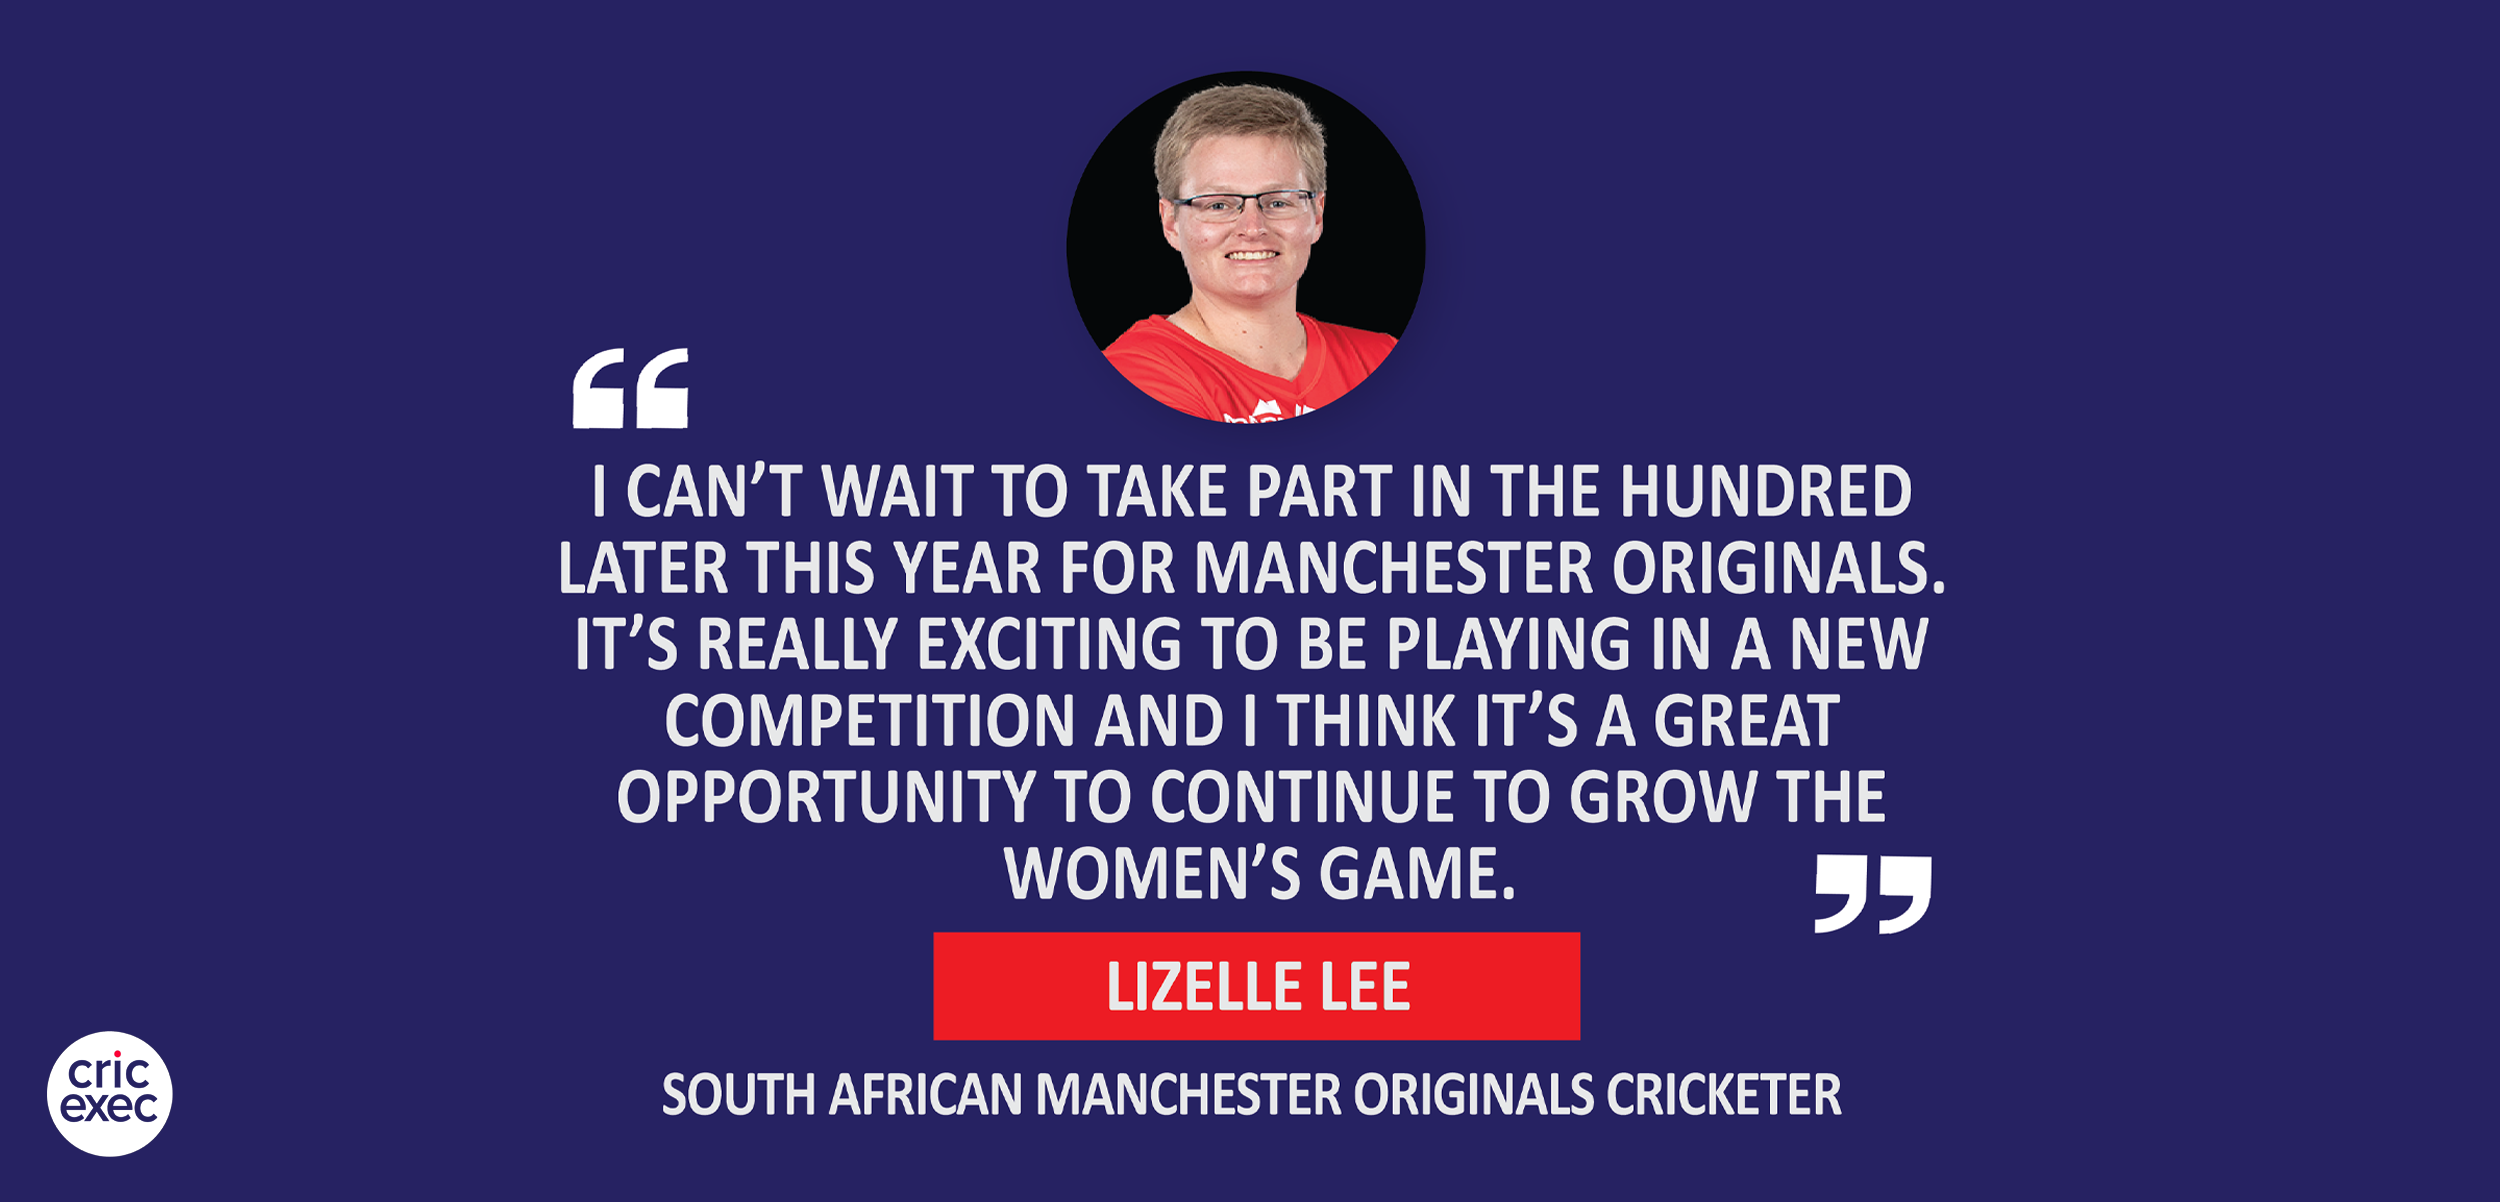 Lizelle Lee, South African Manchester Originals Cricketer